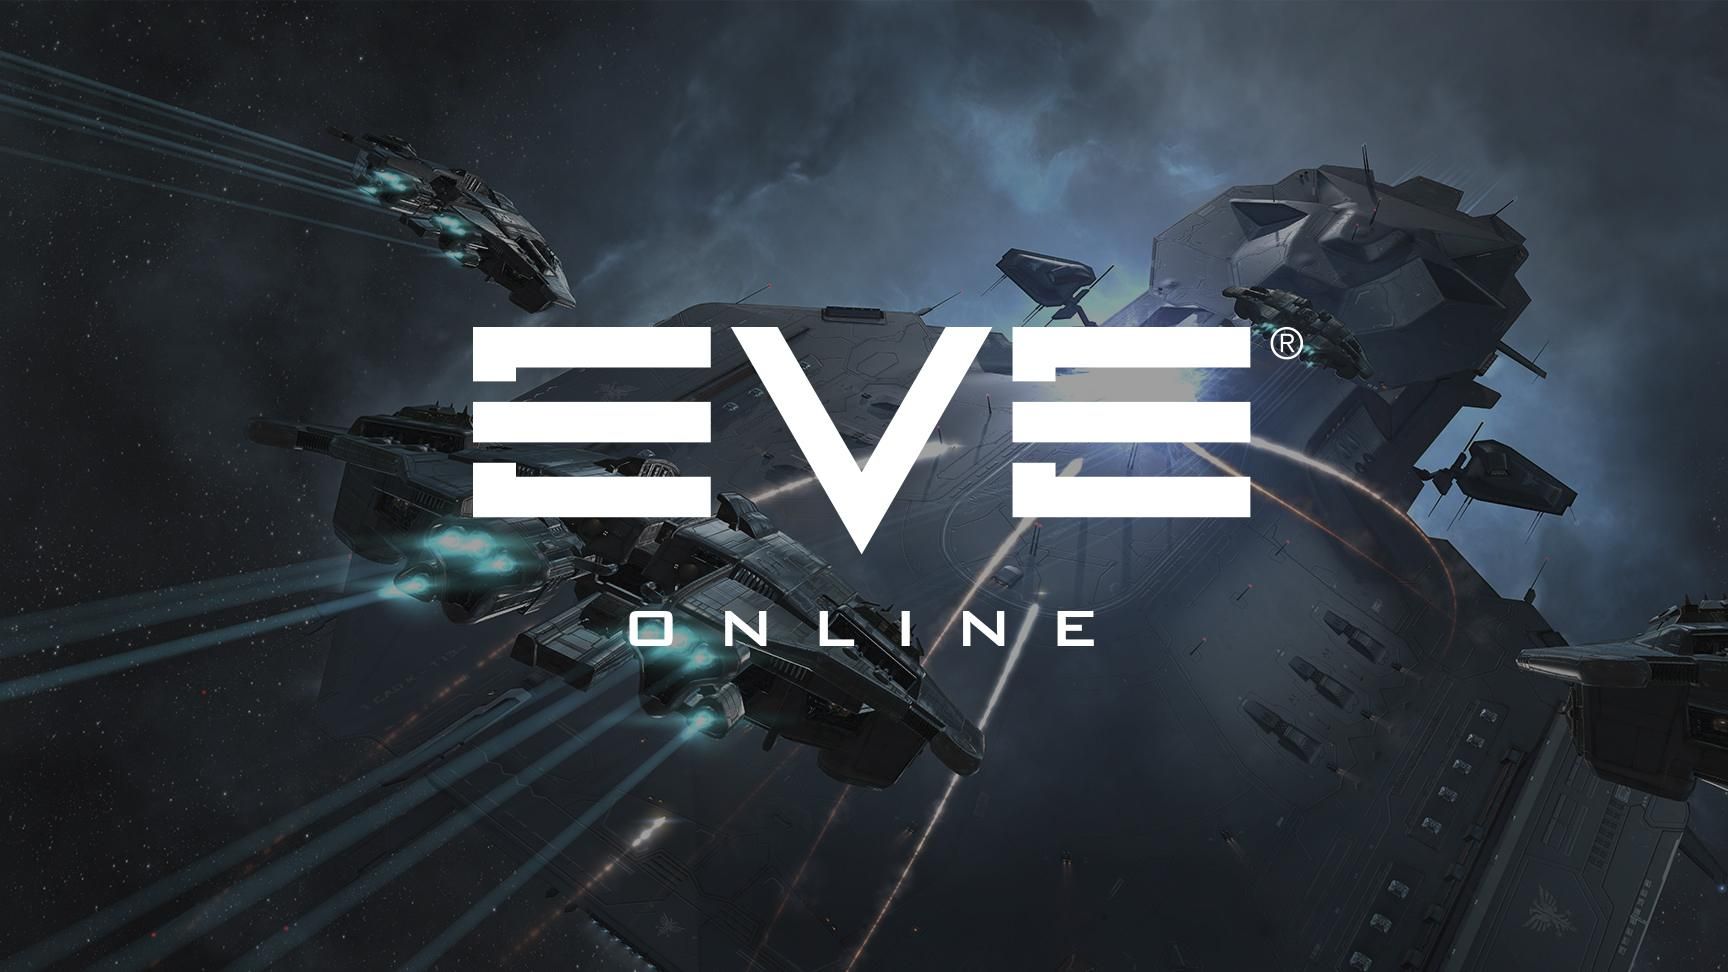 Гра EVE Online вийде на iOS та Android: перший трейлер та дата виходу